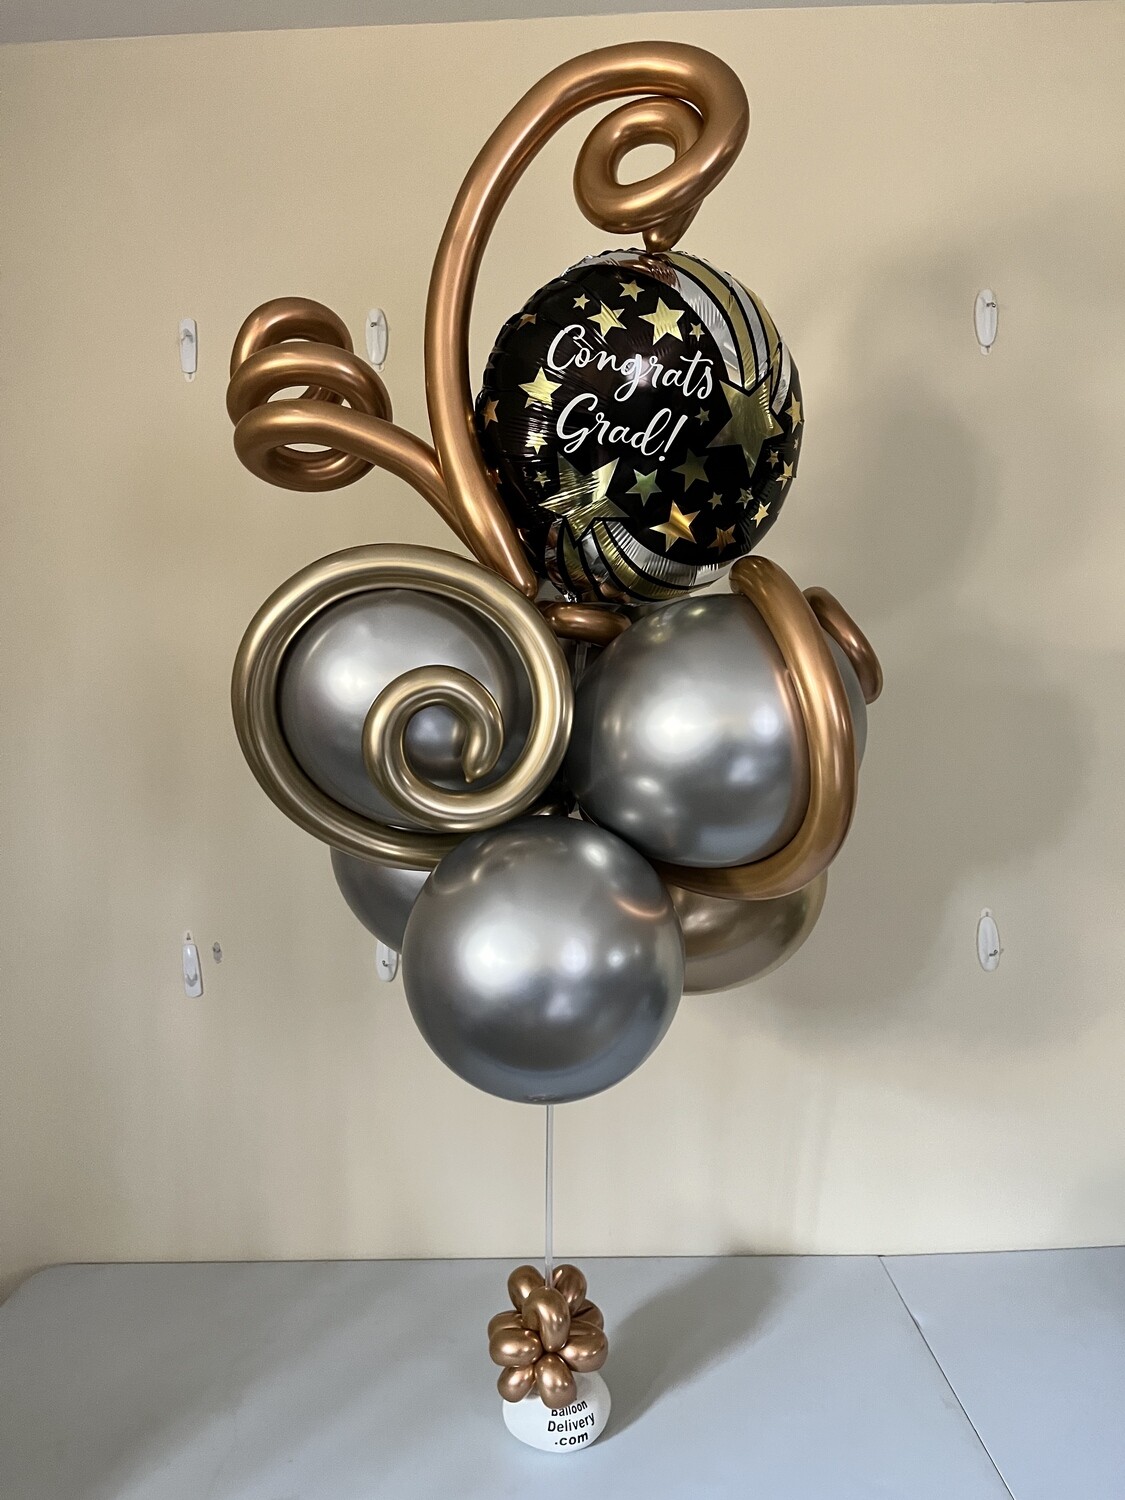 Sophisticated Swirly congrats grad balloon bouquet, metallics & black